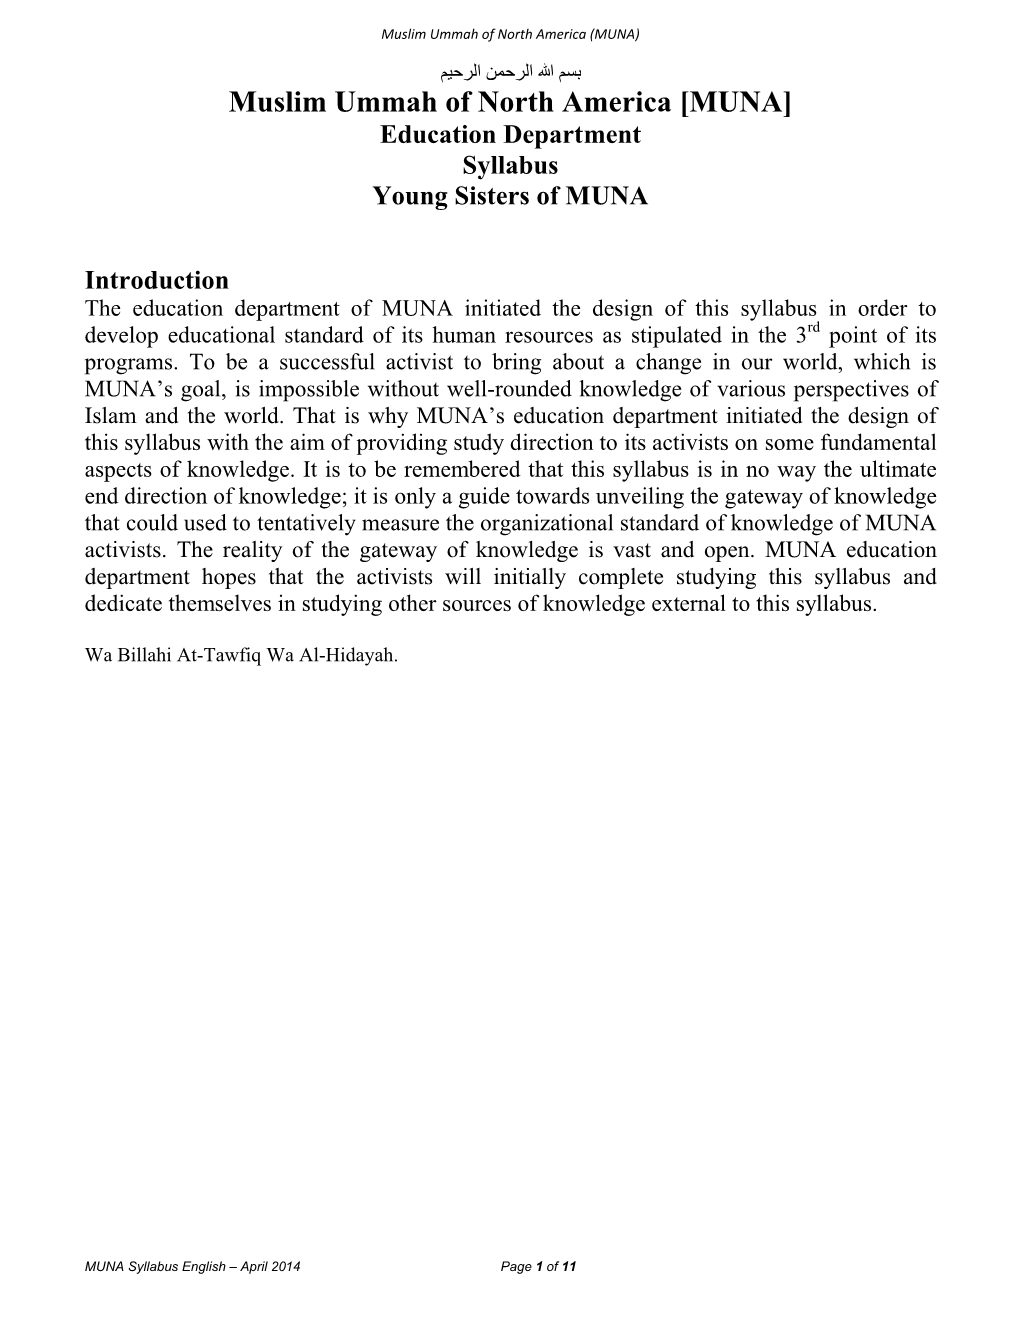 Syllabus-For-YS-Of-MUNA-April-2014